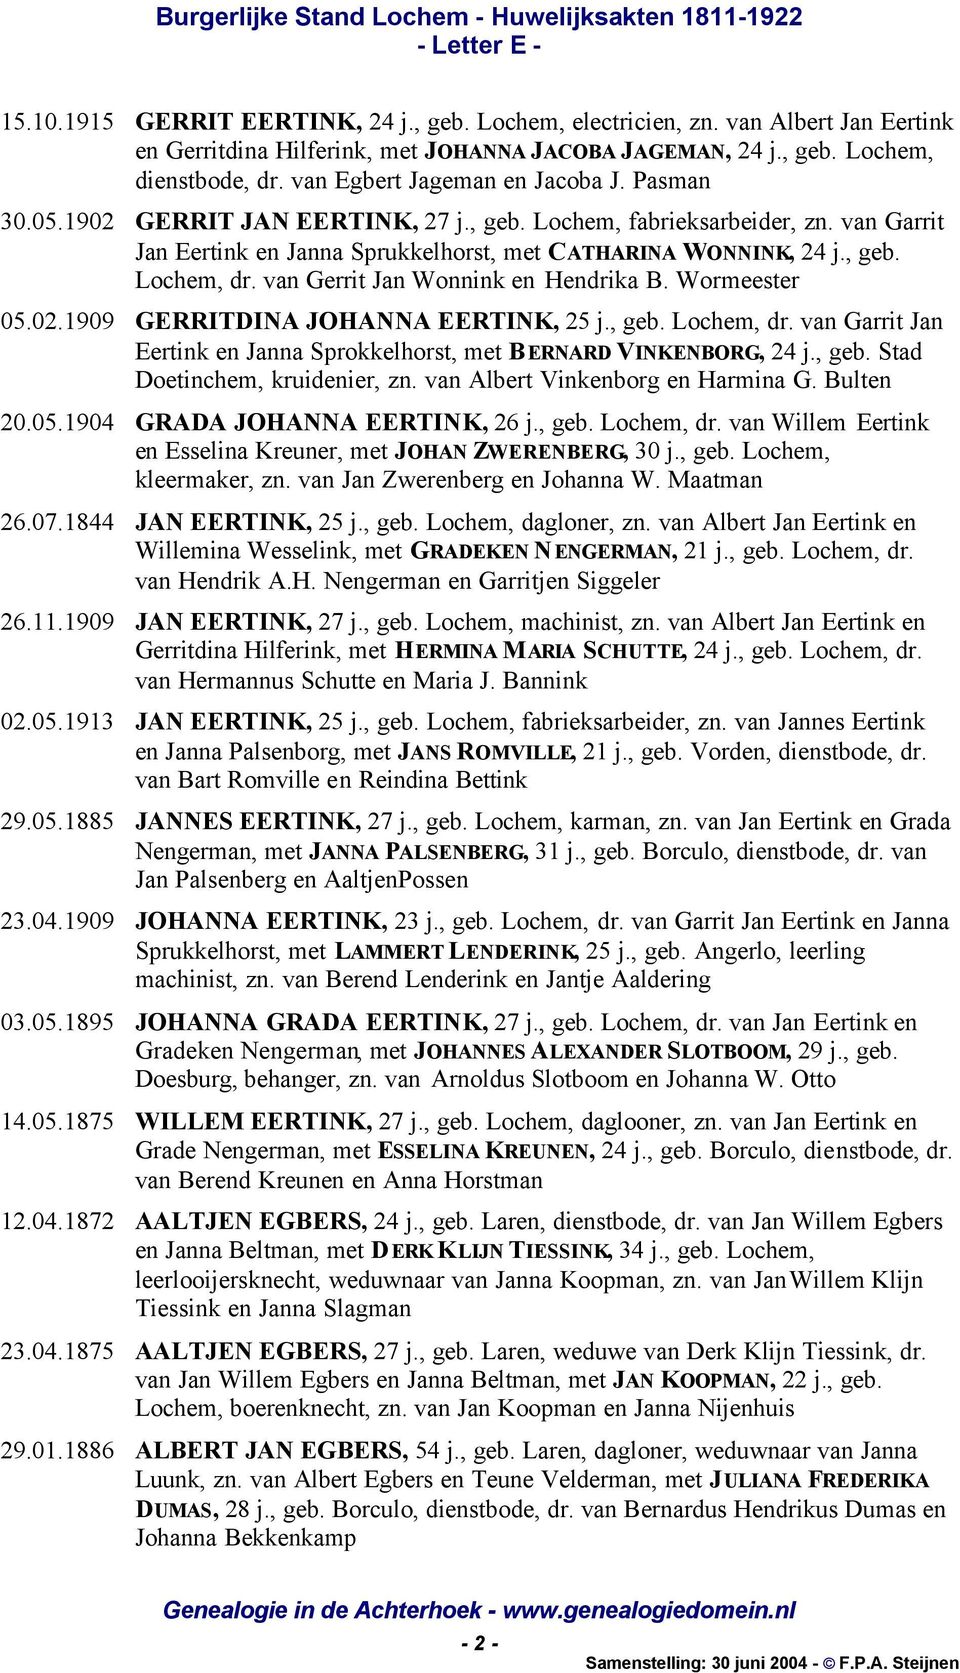 van Gerrit Jan Wonnink en Hendrika B. Wormeester 05.02.1909 GERRITDINA JOHANNA EERTINK, 25 j., geb. Lochem, dr. van Garrit Jan Eertink en Janna Sprokkelhorst, met BERNARD VINKENBORG, 24 j., geb. Stad Doetinchem, kruidenier, zn.